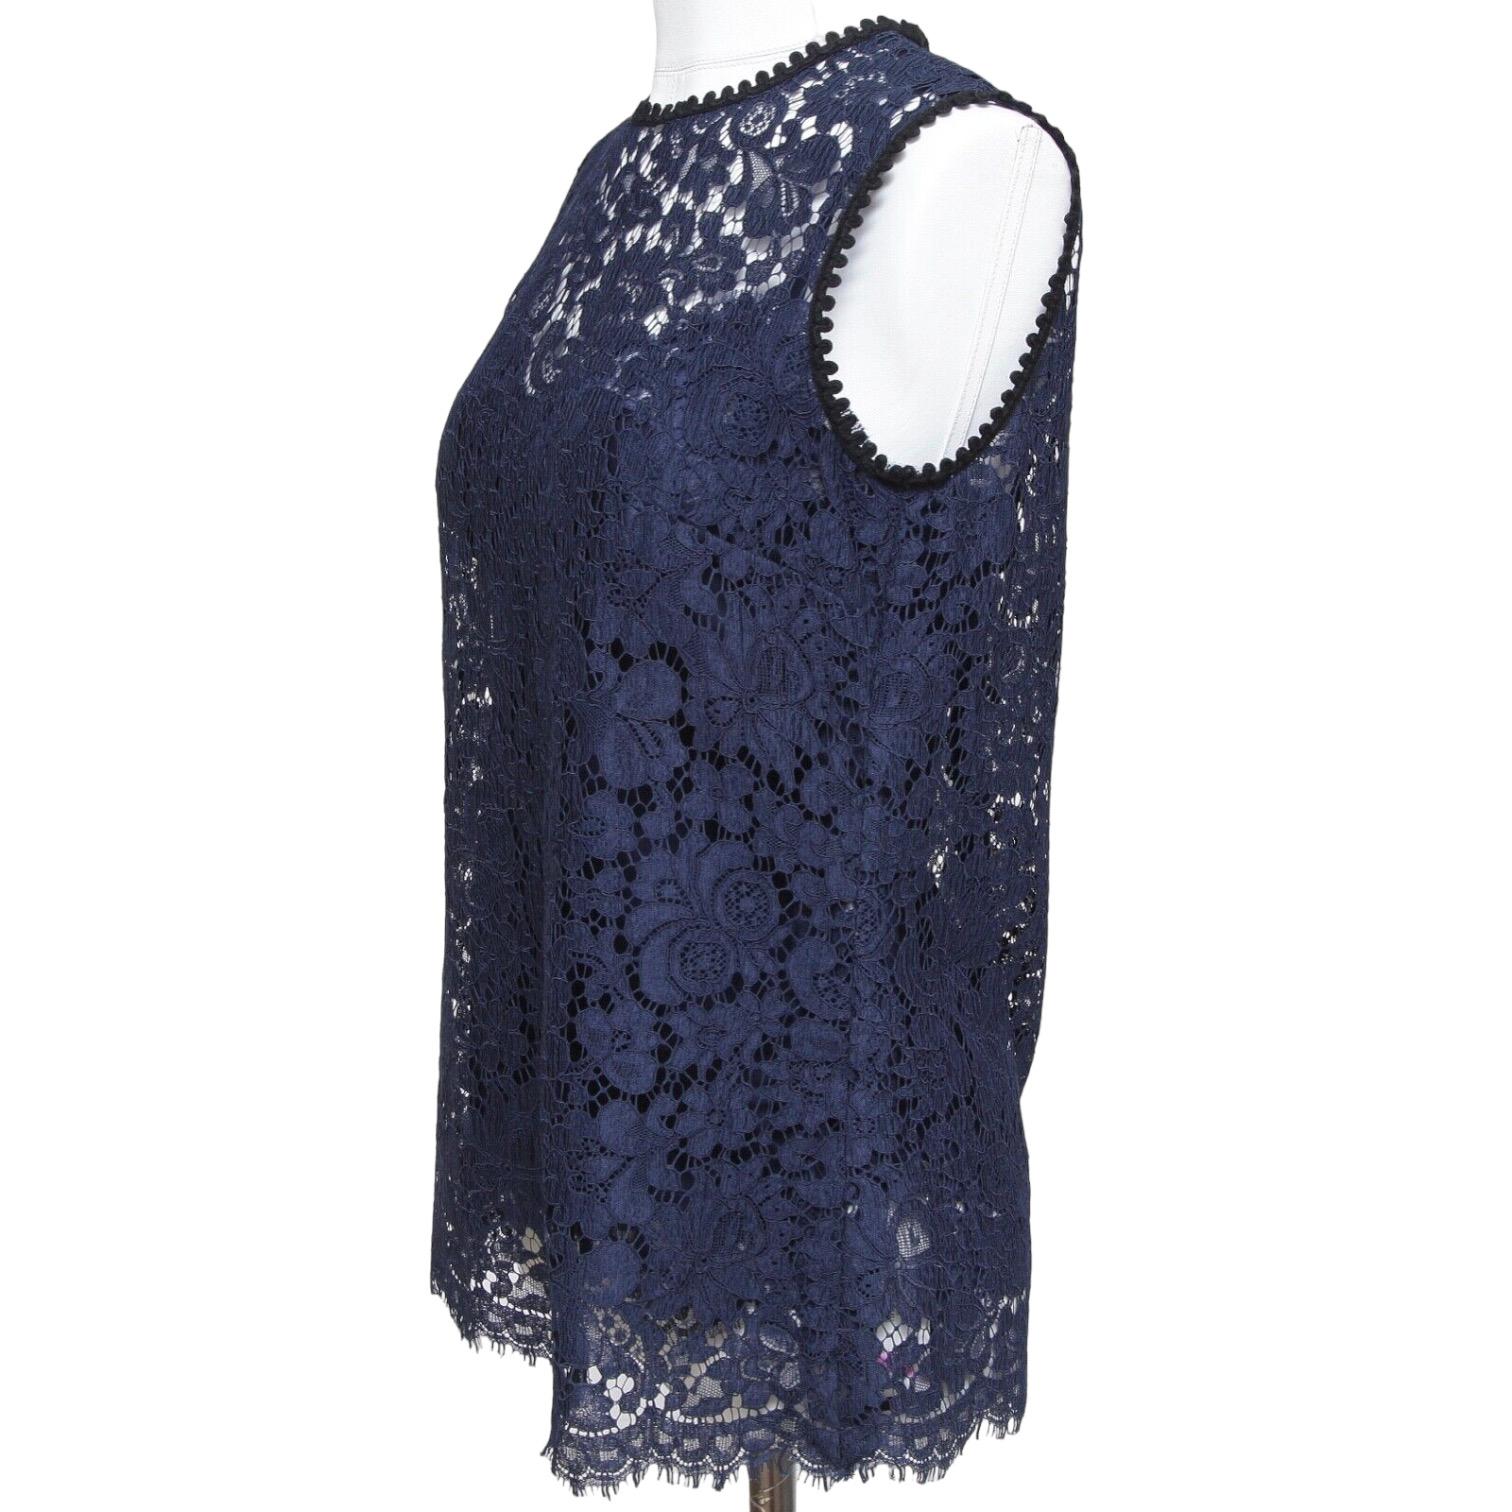 Women's DOLCE & GABBANA Blouse Shirt Top Navy Blue Black Sleeveless Lace Sz 40 Ret $1495 For Sale